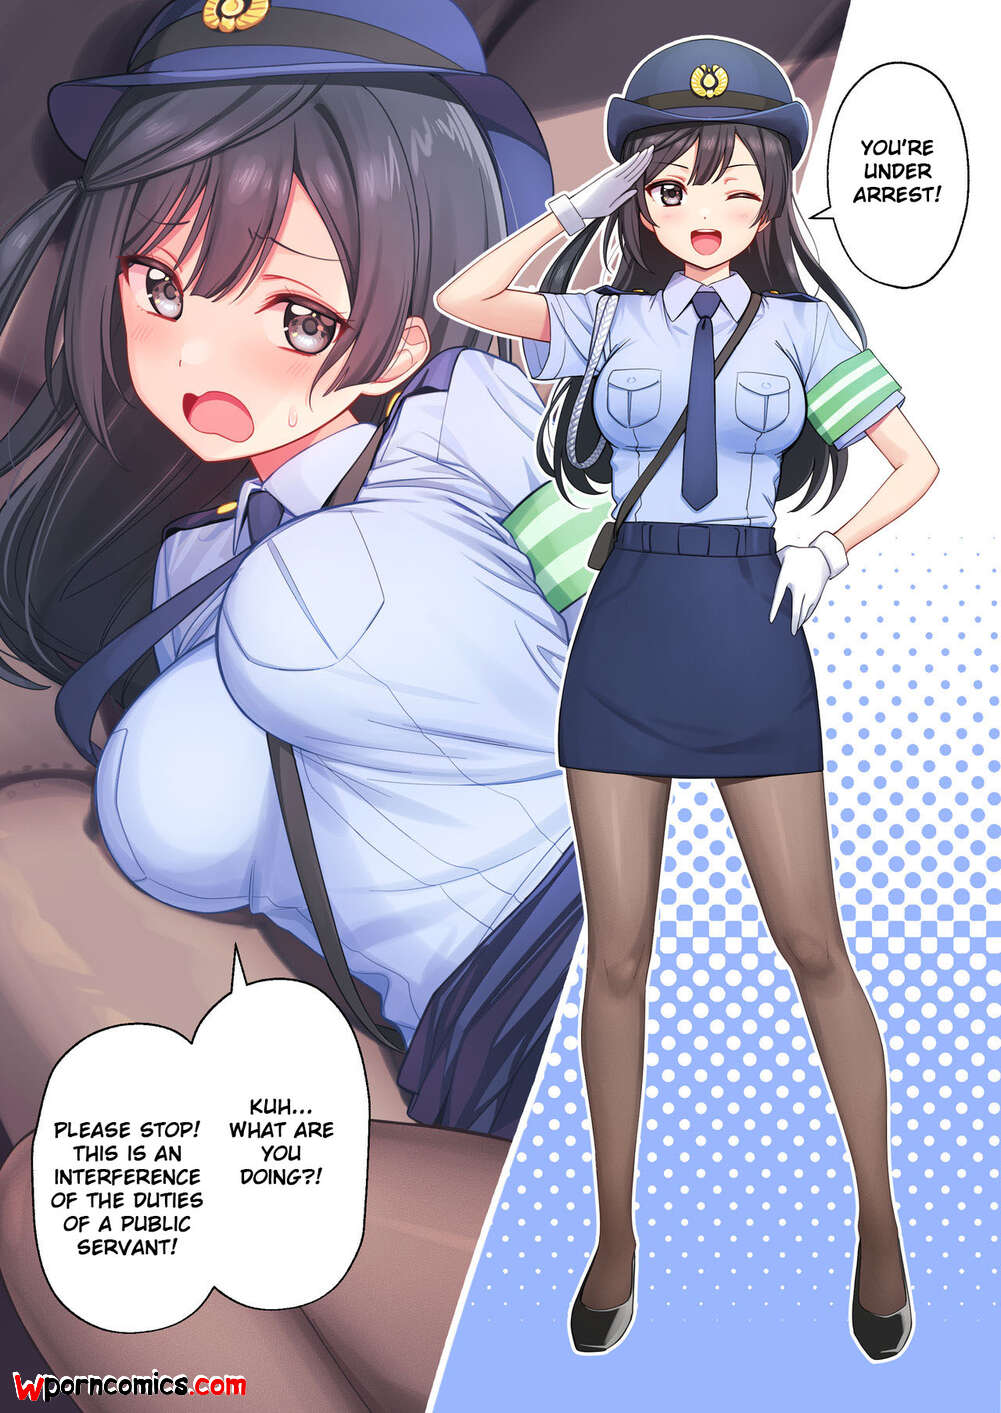 Anime police porn